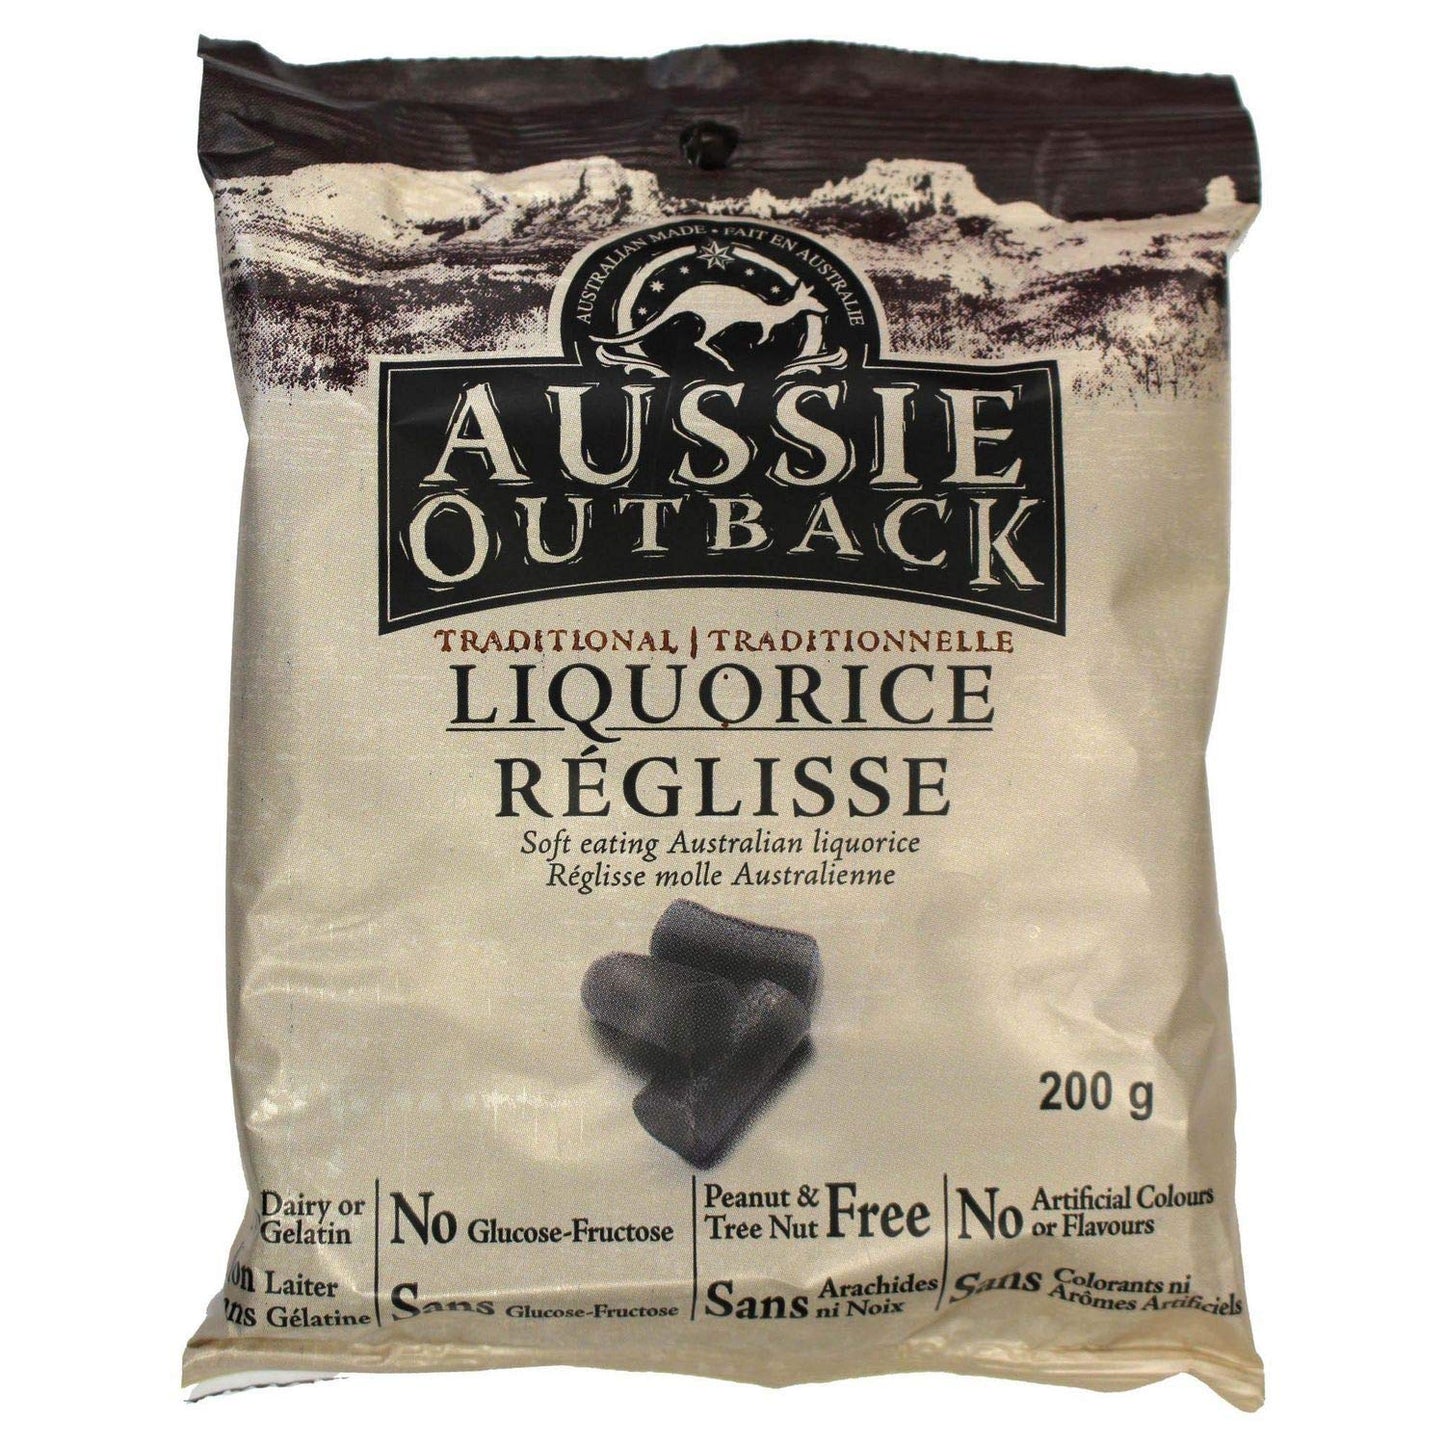 Aussie Outback Black Liquorice